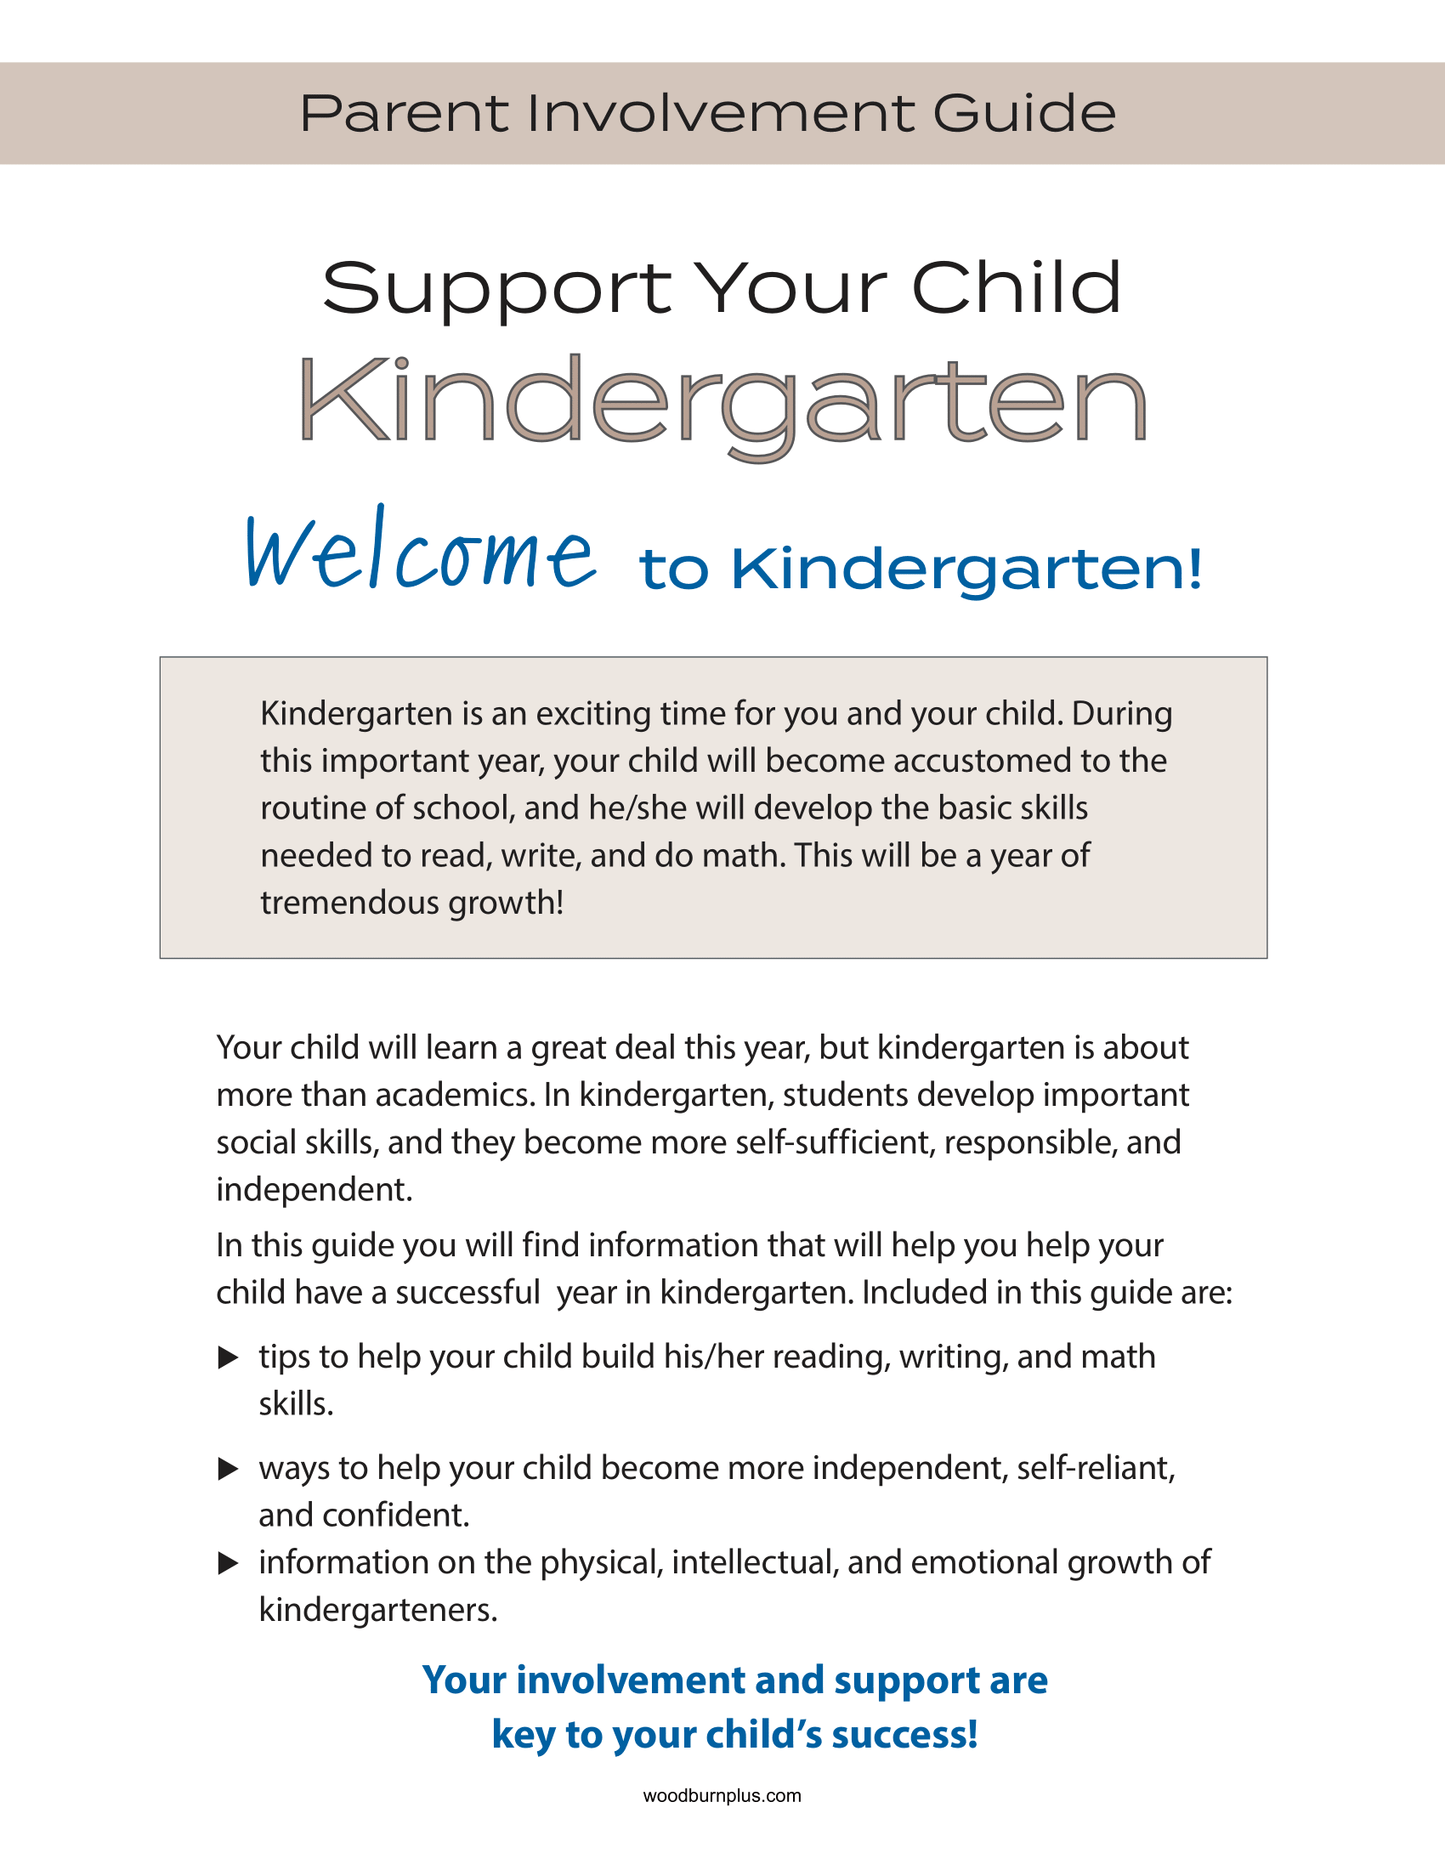 Support Your Child - Kindergarten